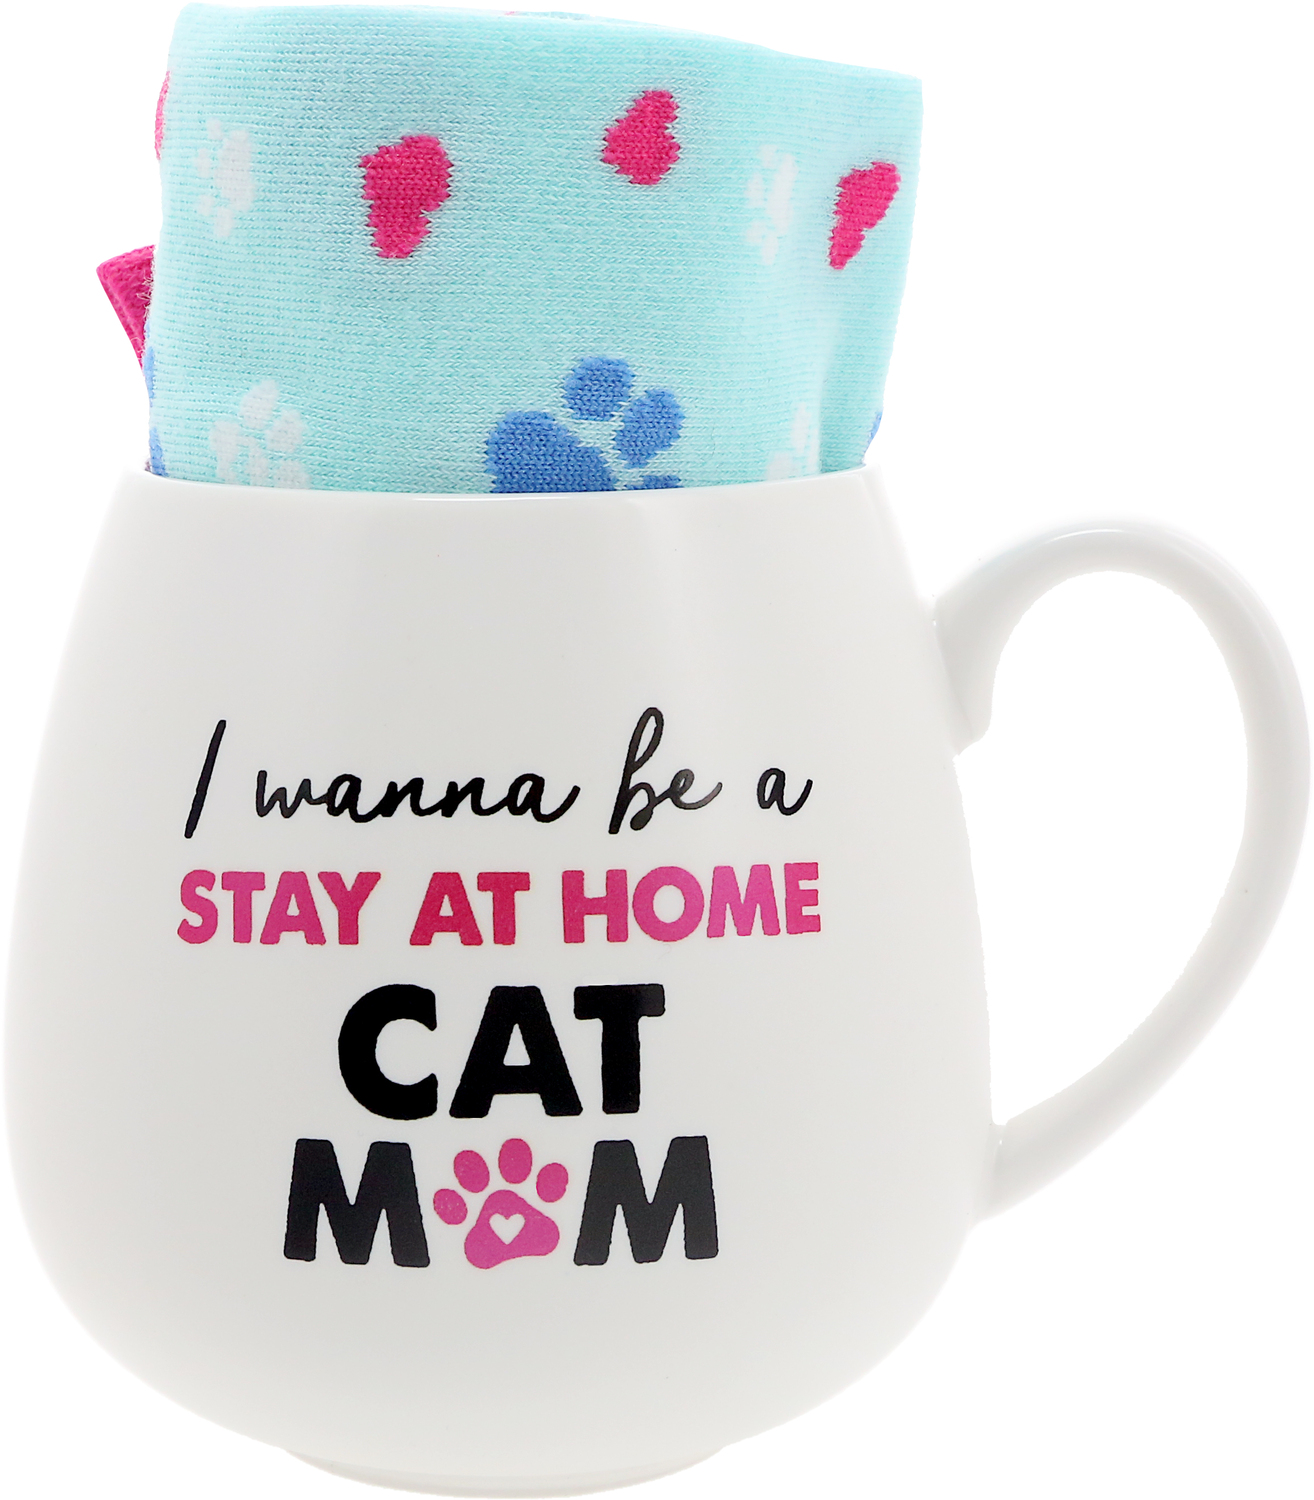 Cat Mom by Warm & Toe-sty - Cat Mom - 15.5 oz Mug and Sock Set